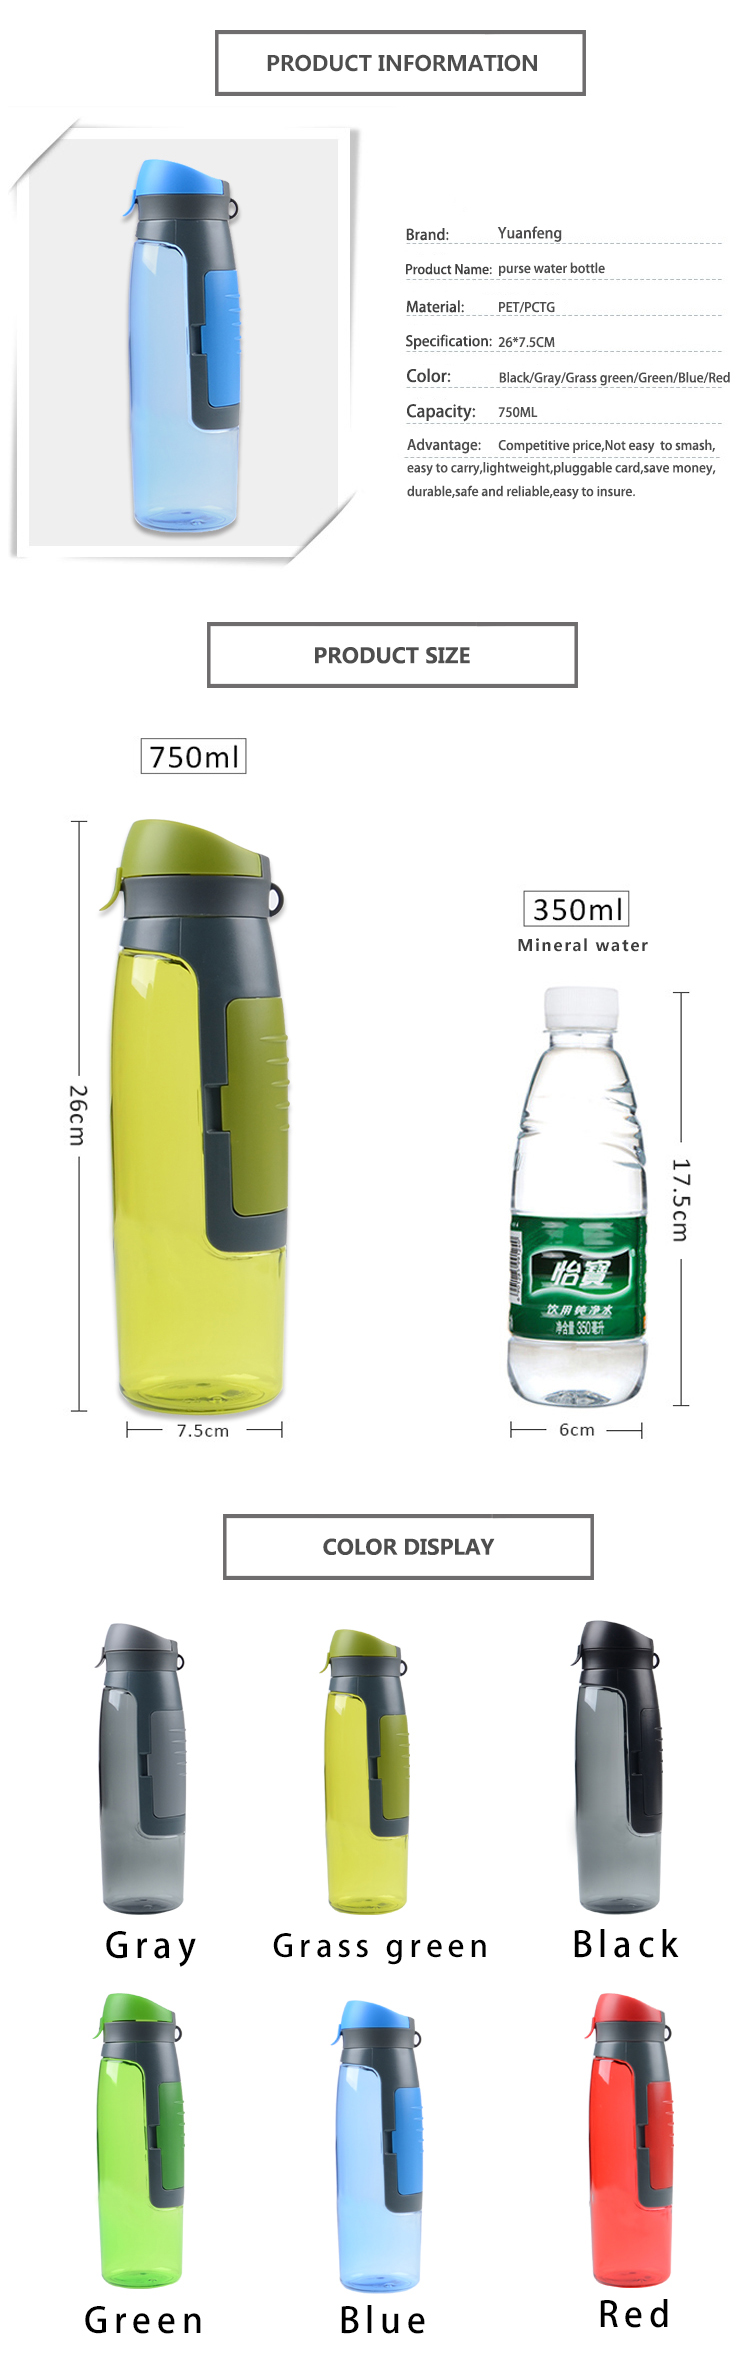 Portable Water Bottle SH-09 Details 5